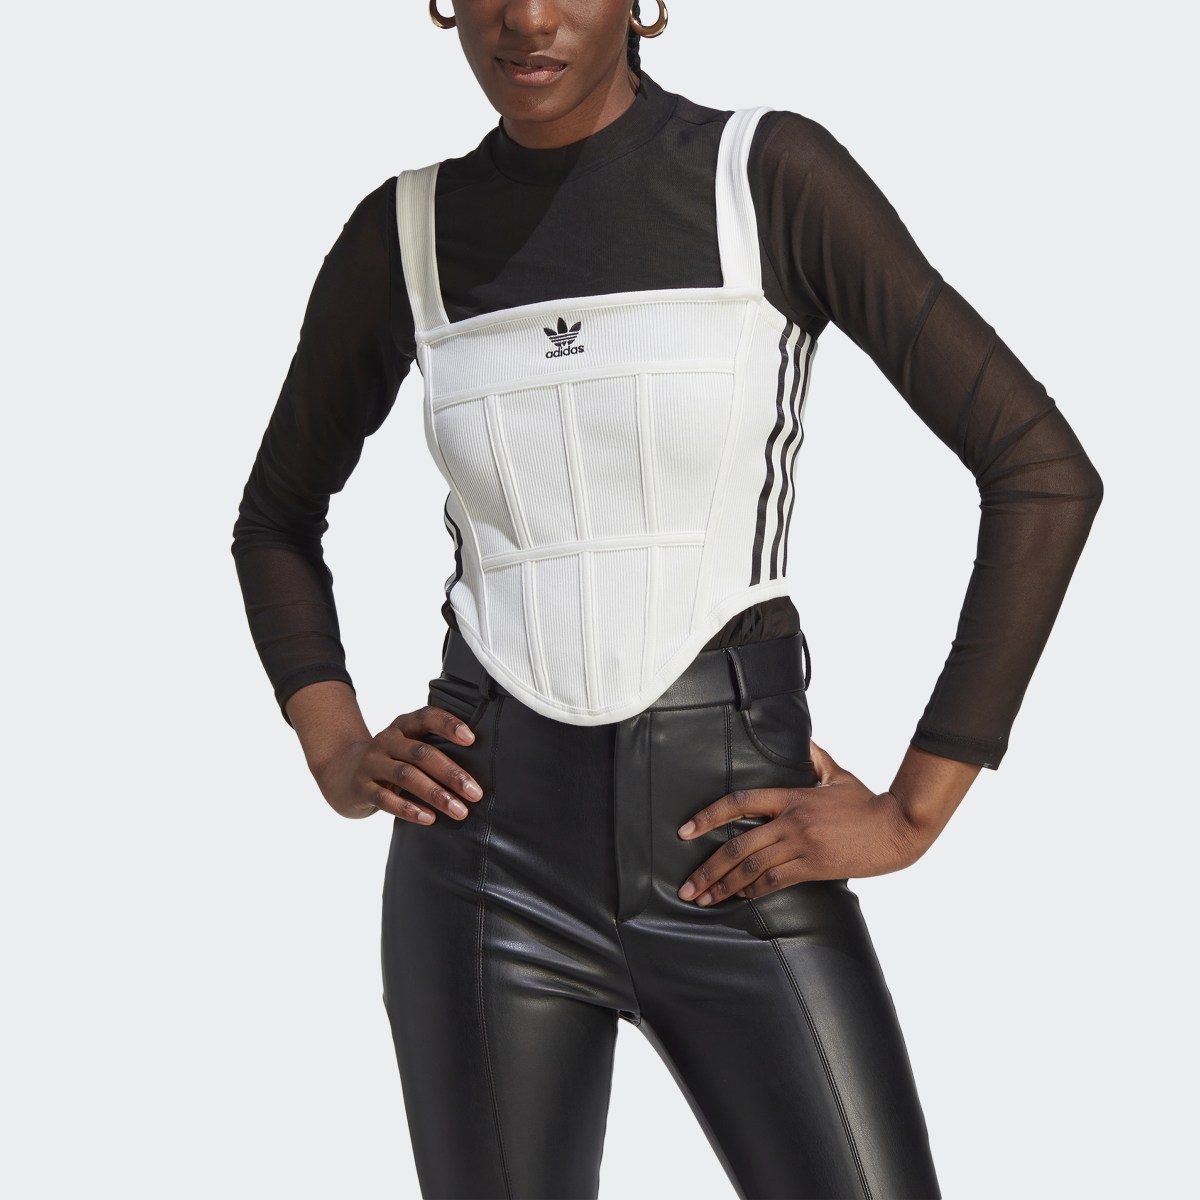 https://assets.adidas.com/images/w_1200,h_1200,f_auto,q_auto:sensitive/f49458aecbbf493fbec6afc200adae38_9366/rib-corset-tank-top.jpg